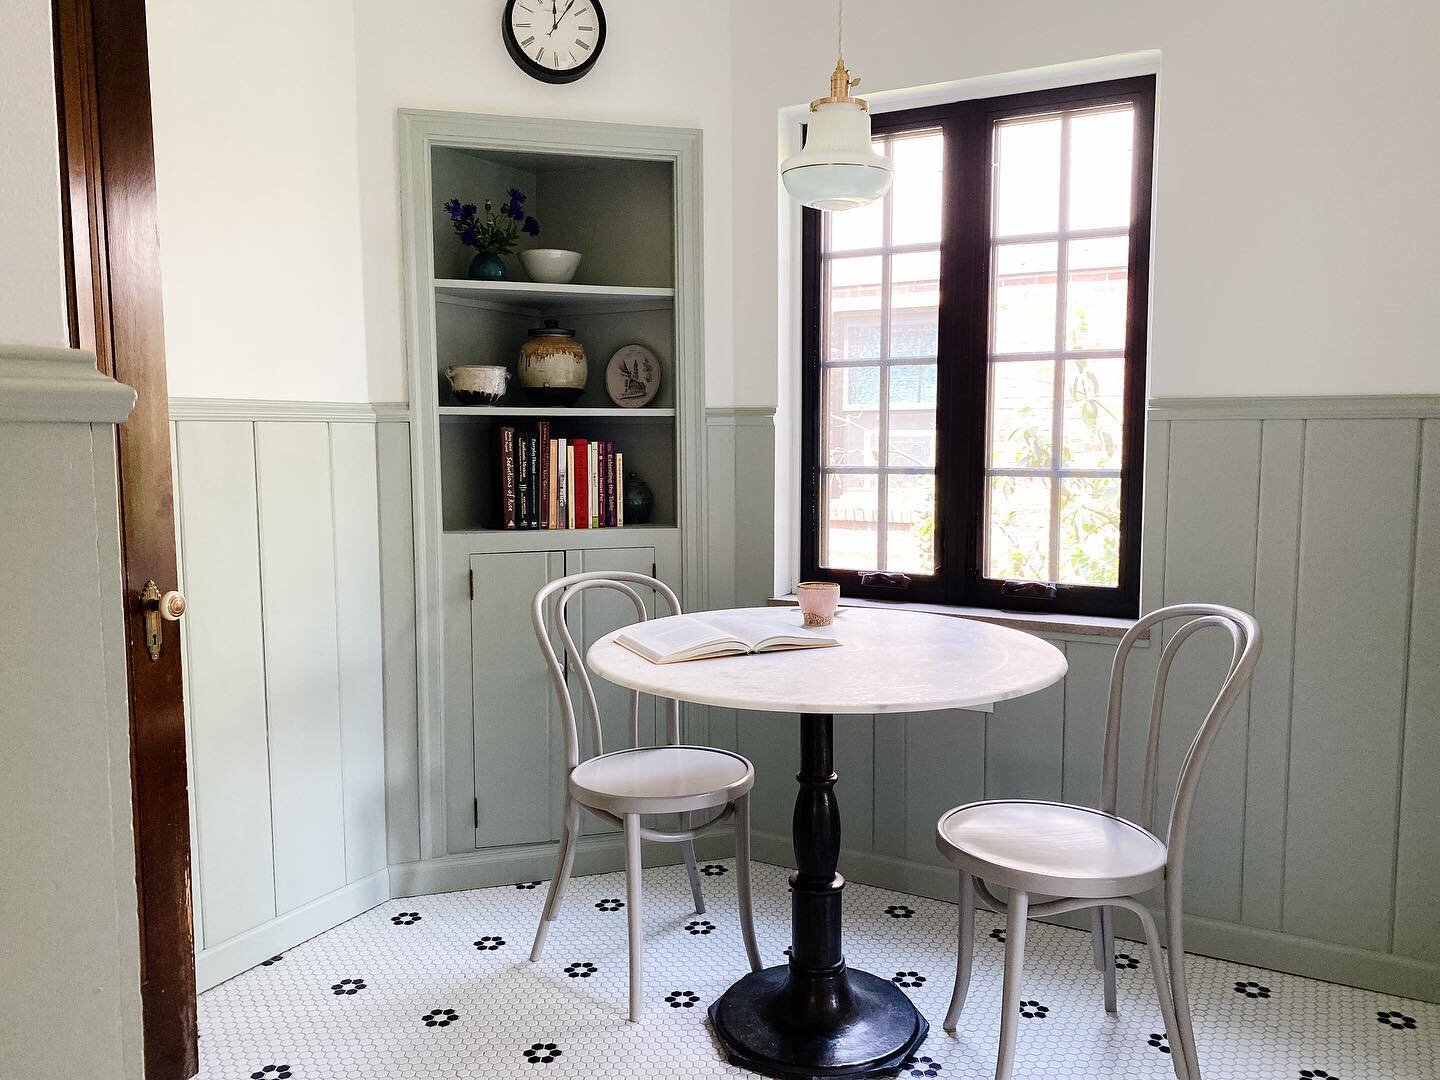 A little breakfast room before and after!
&mdash;
#interiordesign #interiordesigner #home #oldhouselove #homedesign #cincinnatiinteriordesign #cincinnatiinteriordesigner #cincinnatiinteriordecorator #cincinnatiinteriors